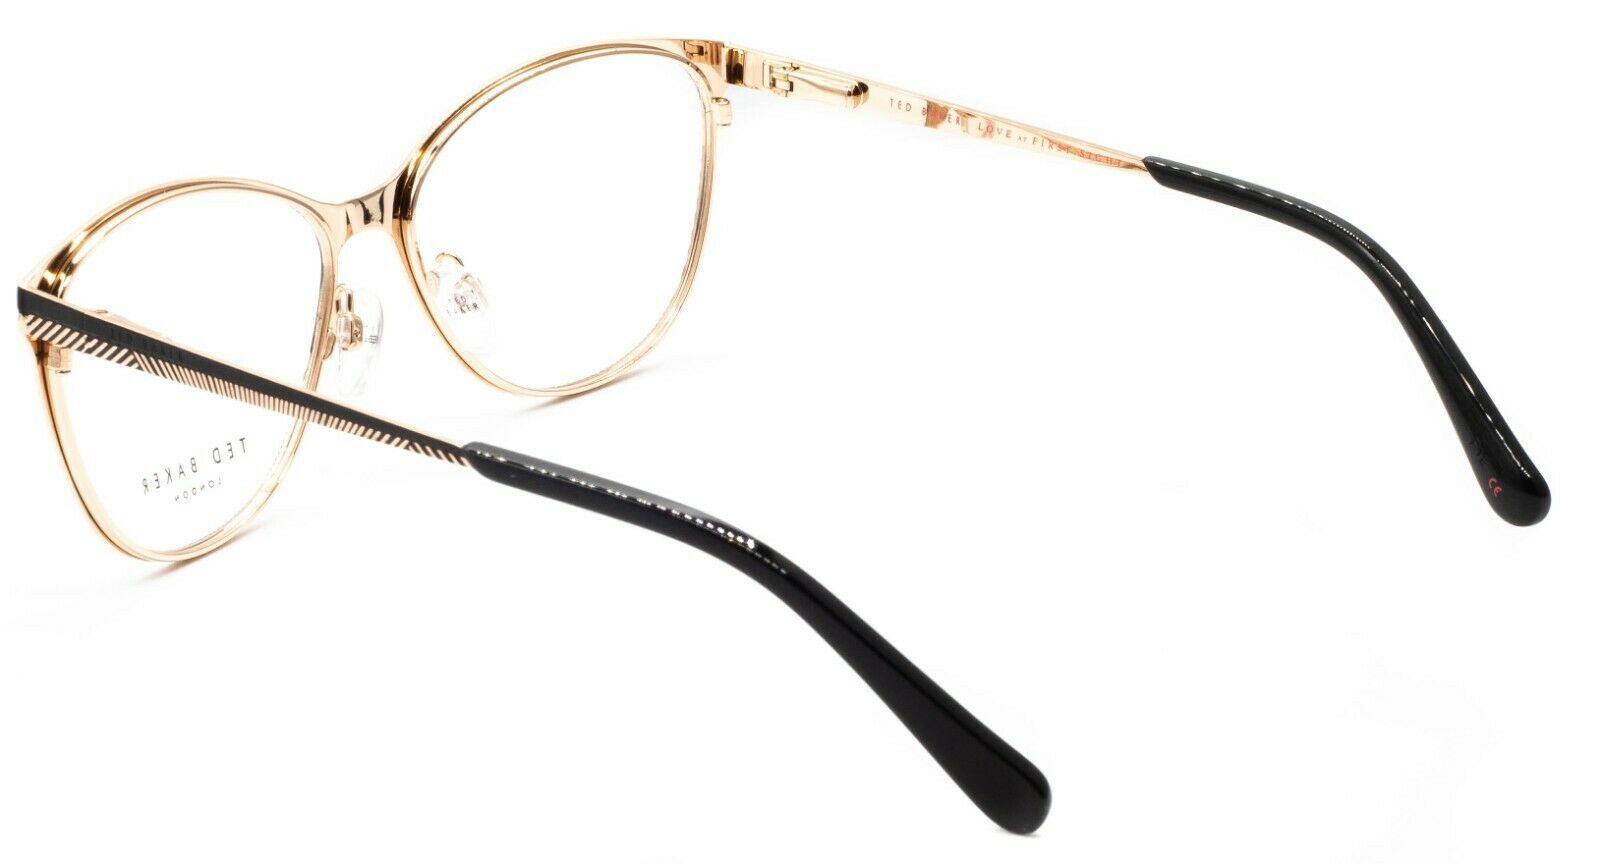 TED BAKER 2239 004 Hazel 56mm Eyewear FRAMES Glasses Eyeglasses RX Optical - New